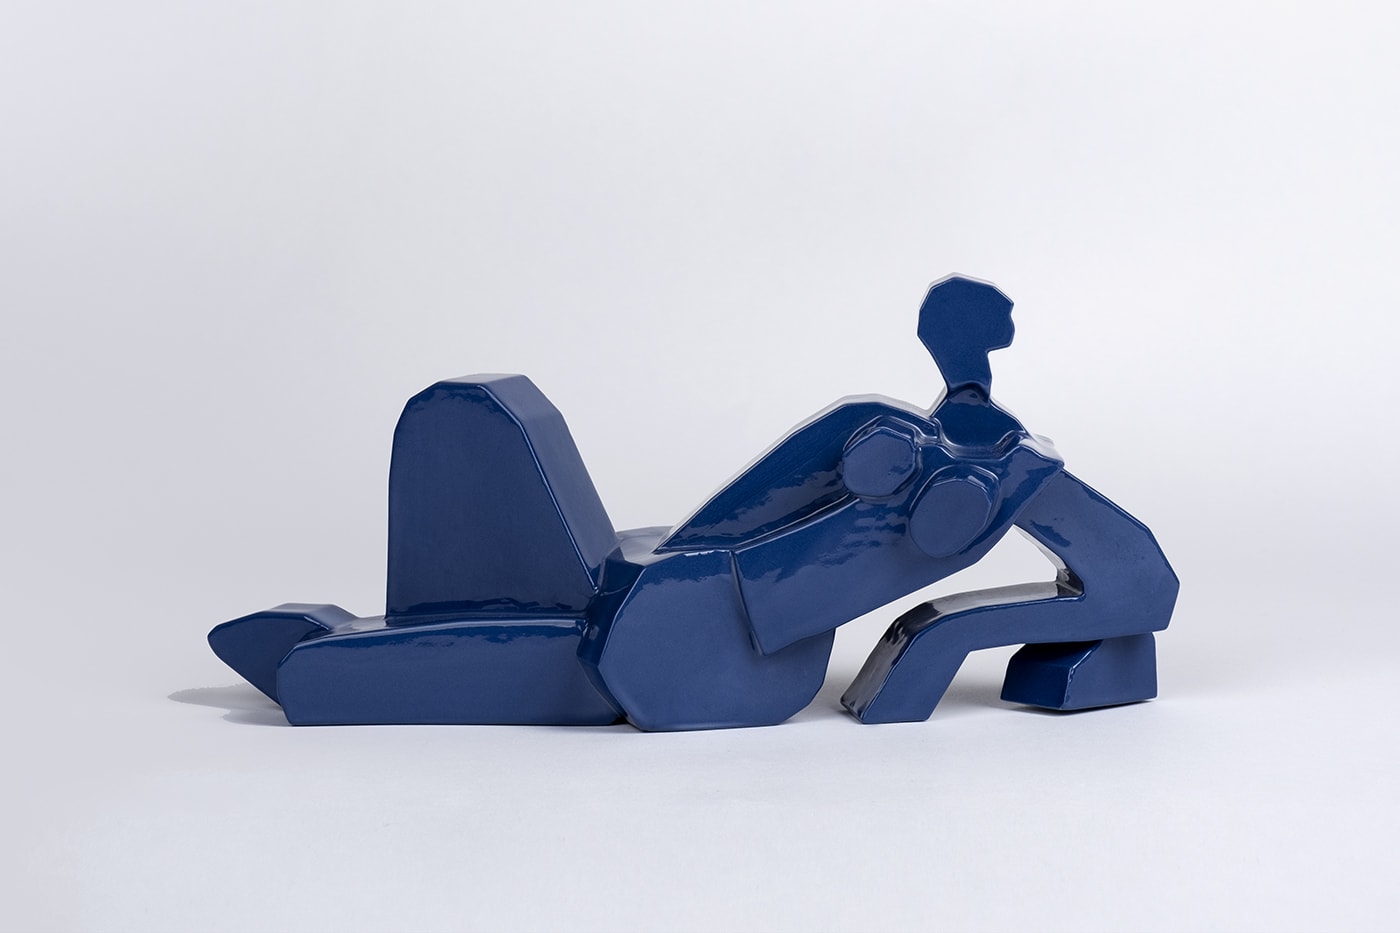 jonathan chapline reclining nude porcelain sculpture case studyo collectible artwork art